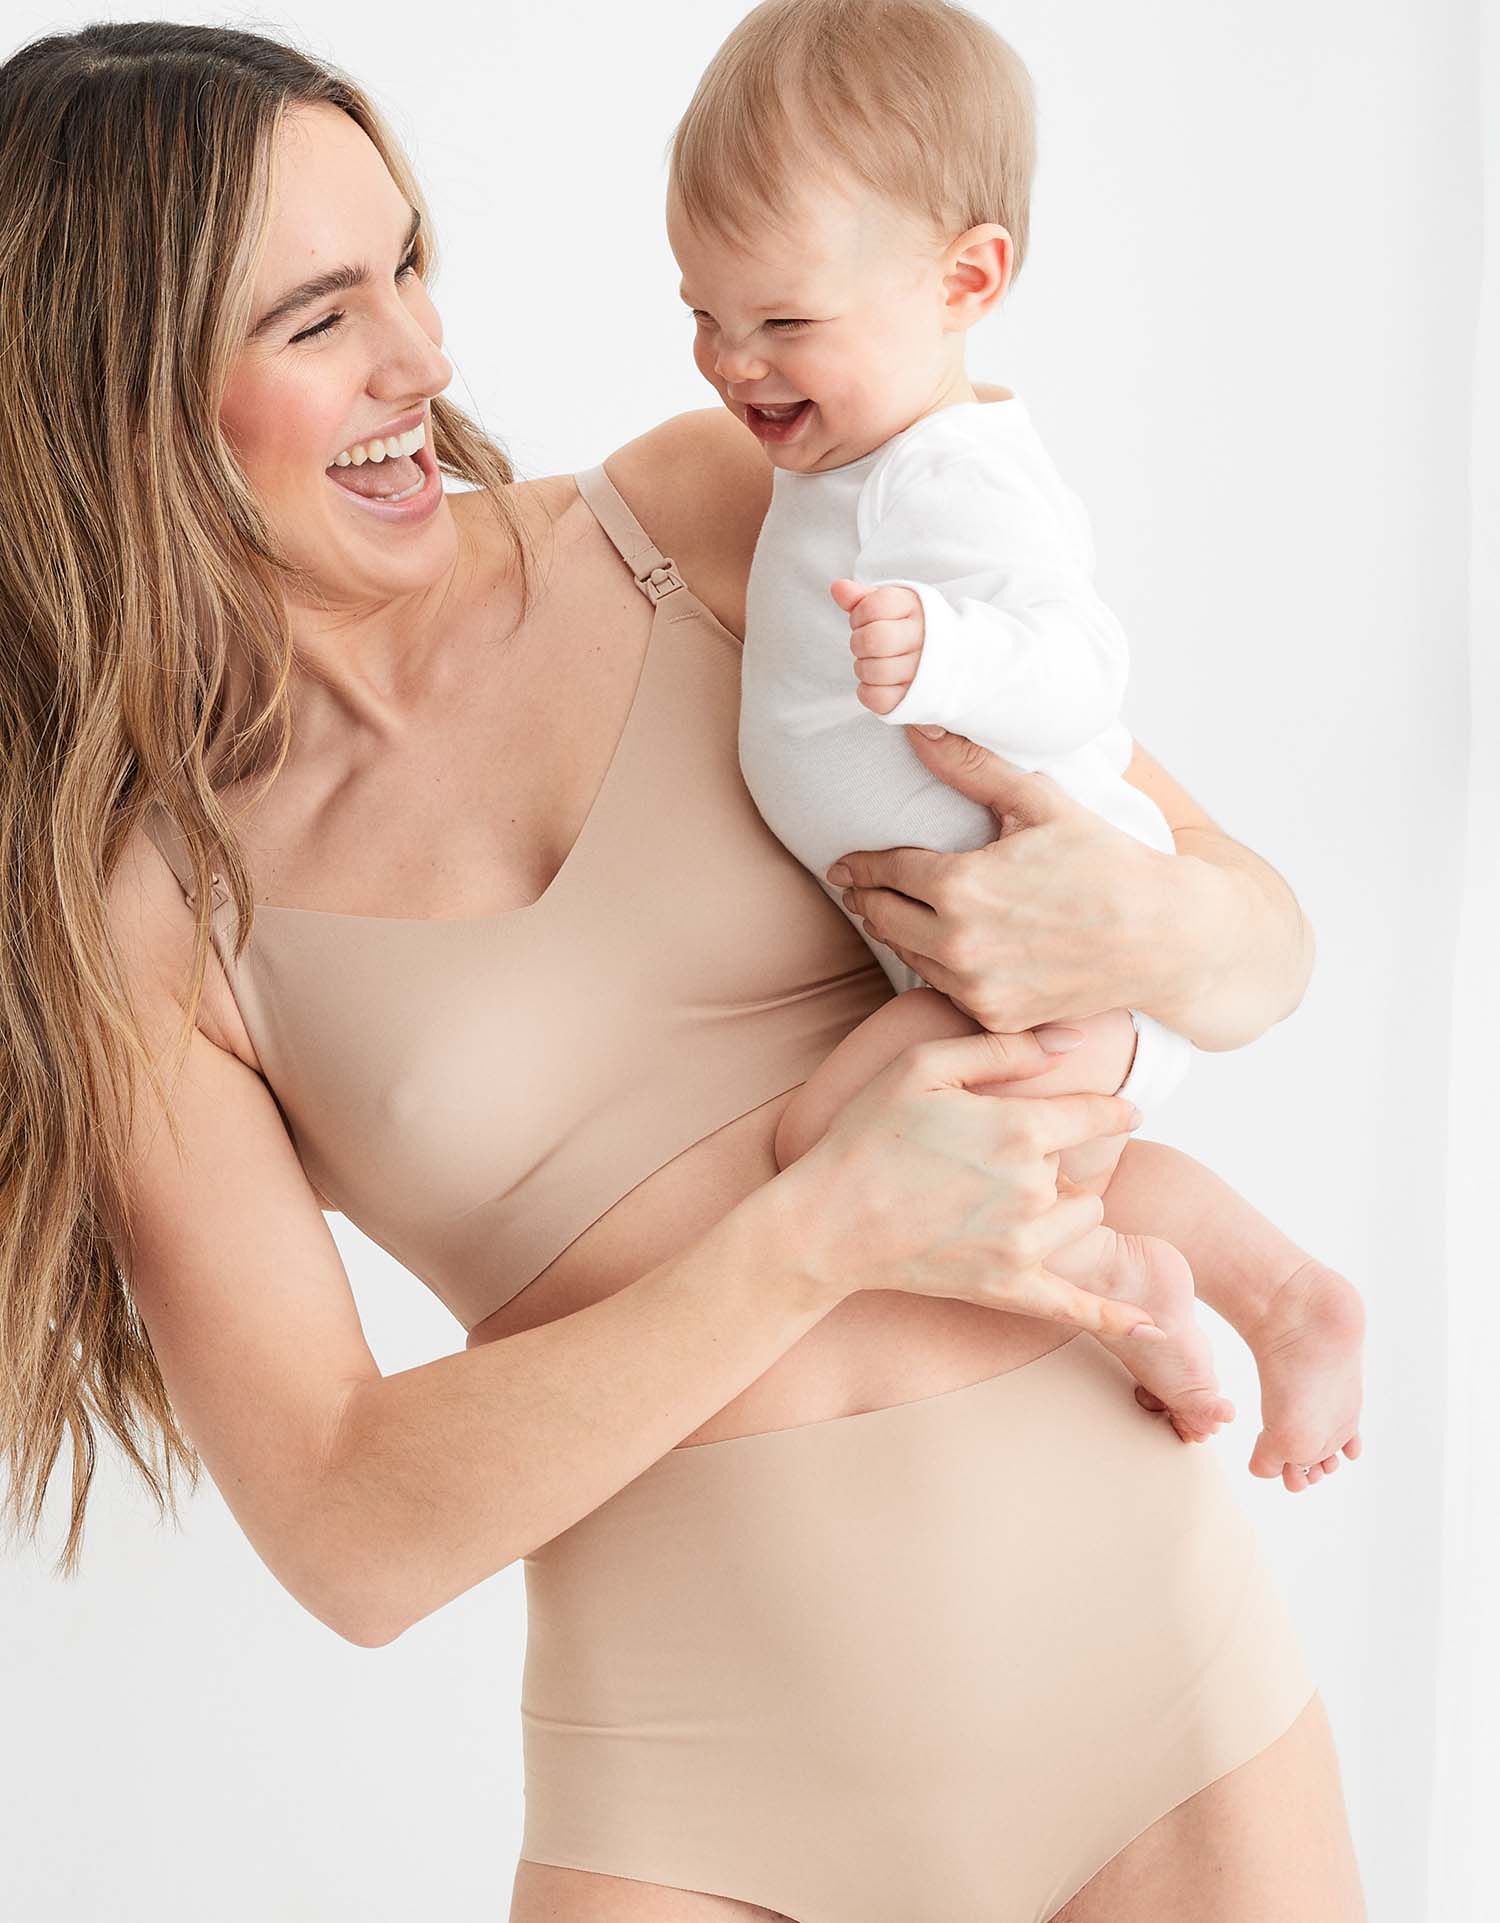 Nursing tank top recommendations? - Breastfeeding, Forums